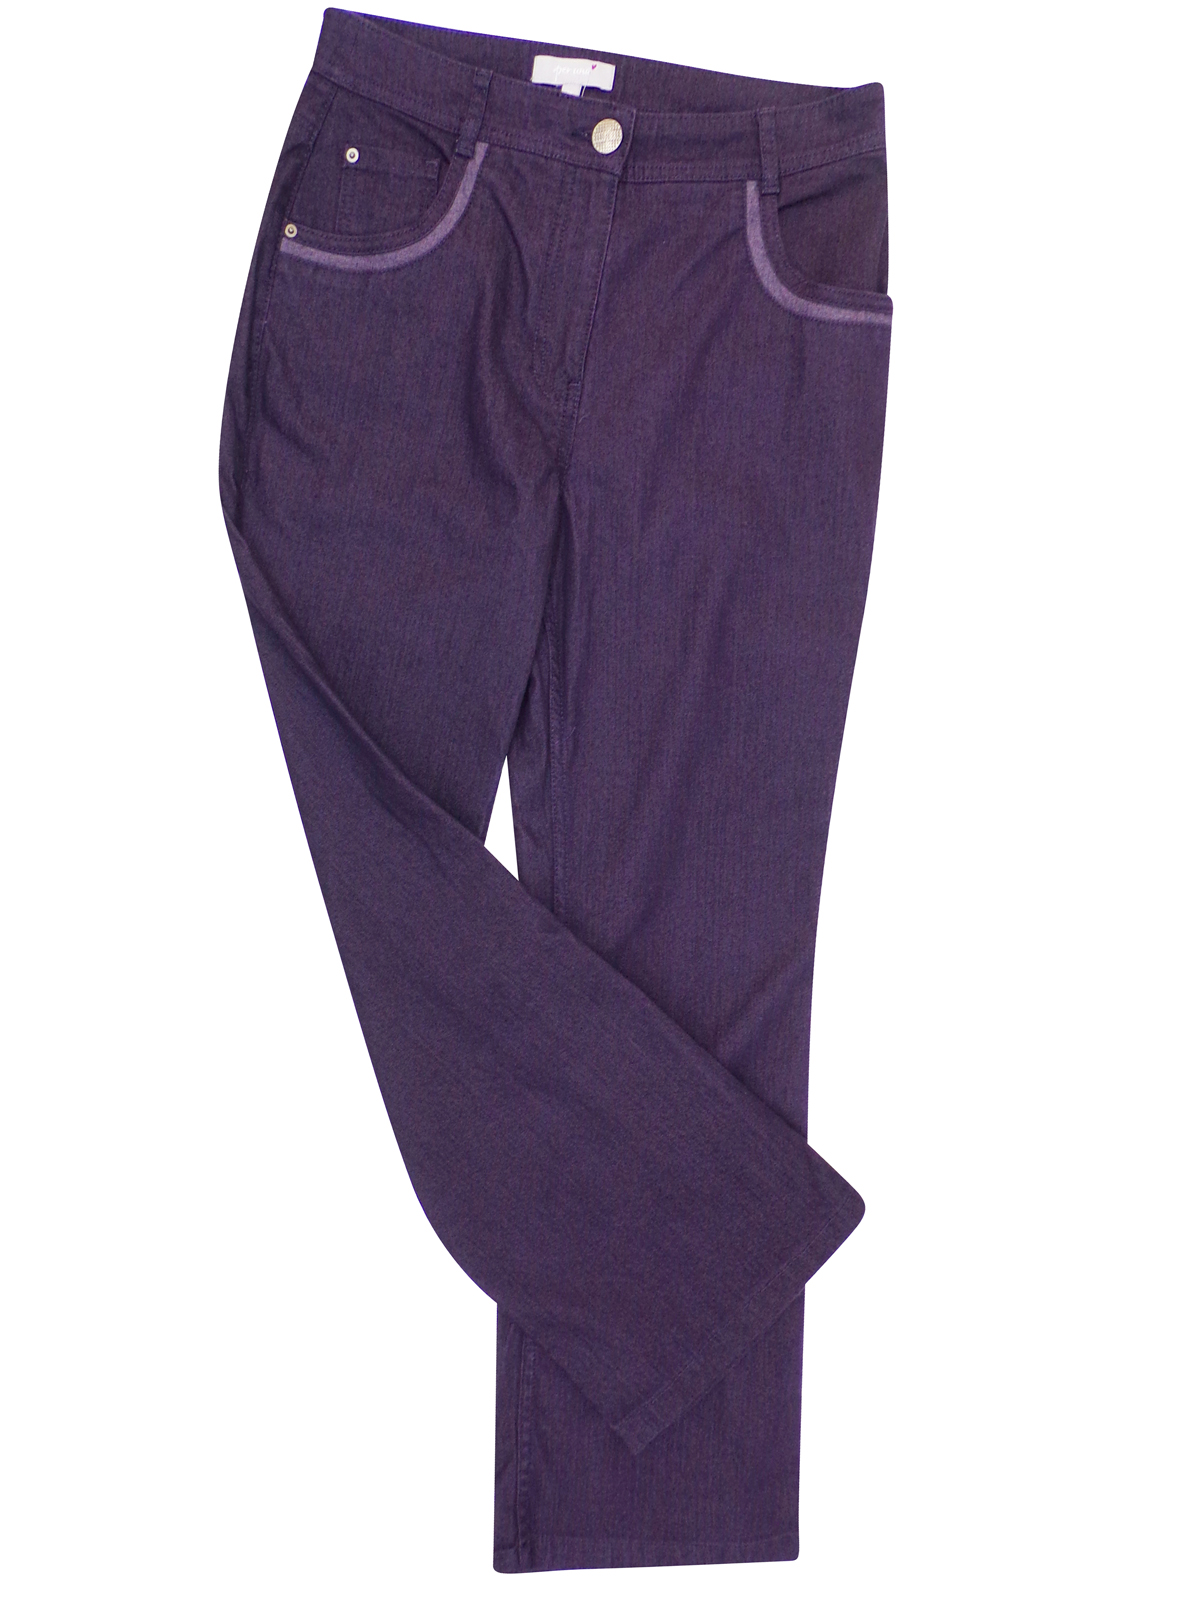 P3rUna PURPLE Bootleg Denim Jeans - Size 10 to 14